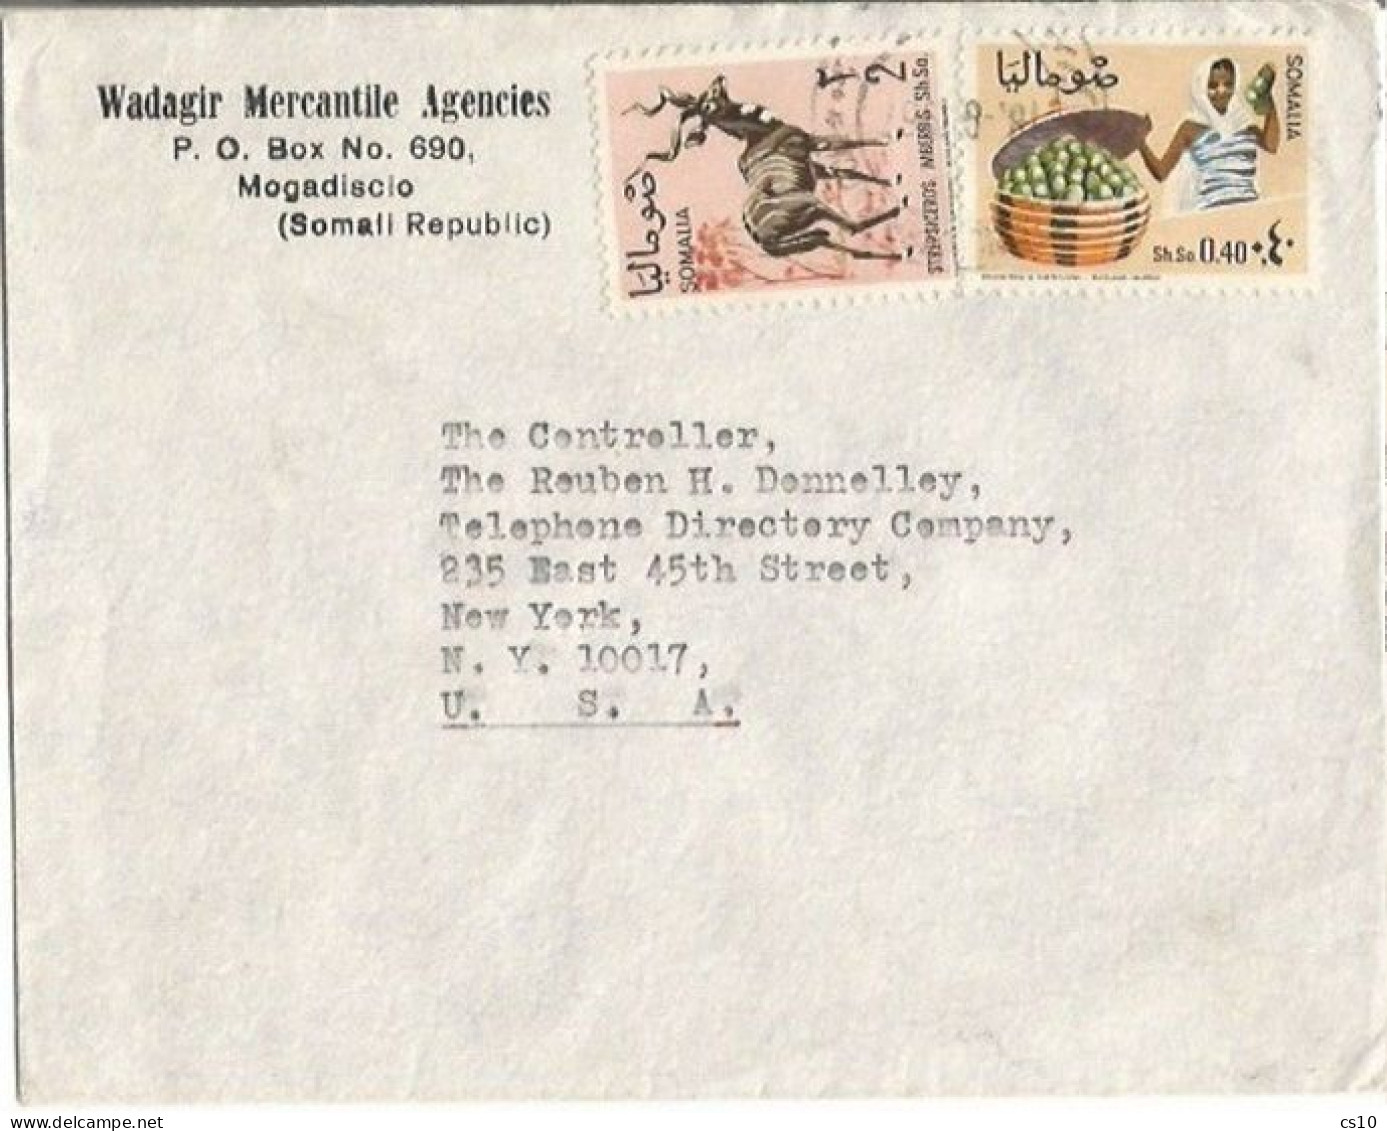 Antelopes Of Somalia Issue 60's S2 + Other Commerce AirmailCV M.shu 18aug1967 To USA - Somalia (1960-...)